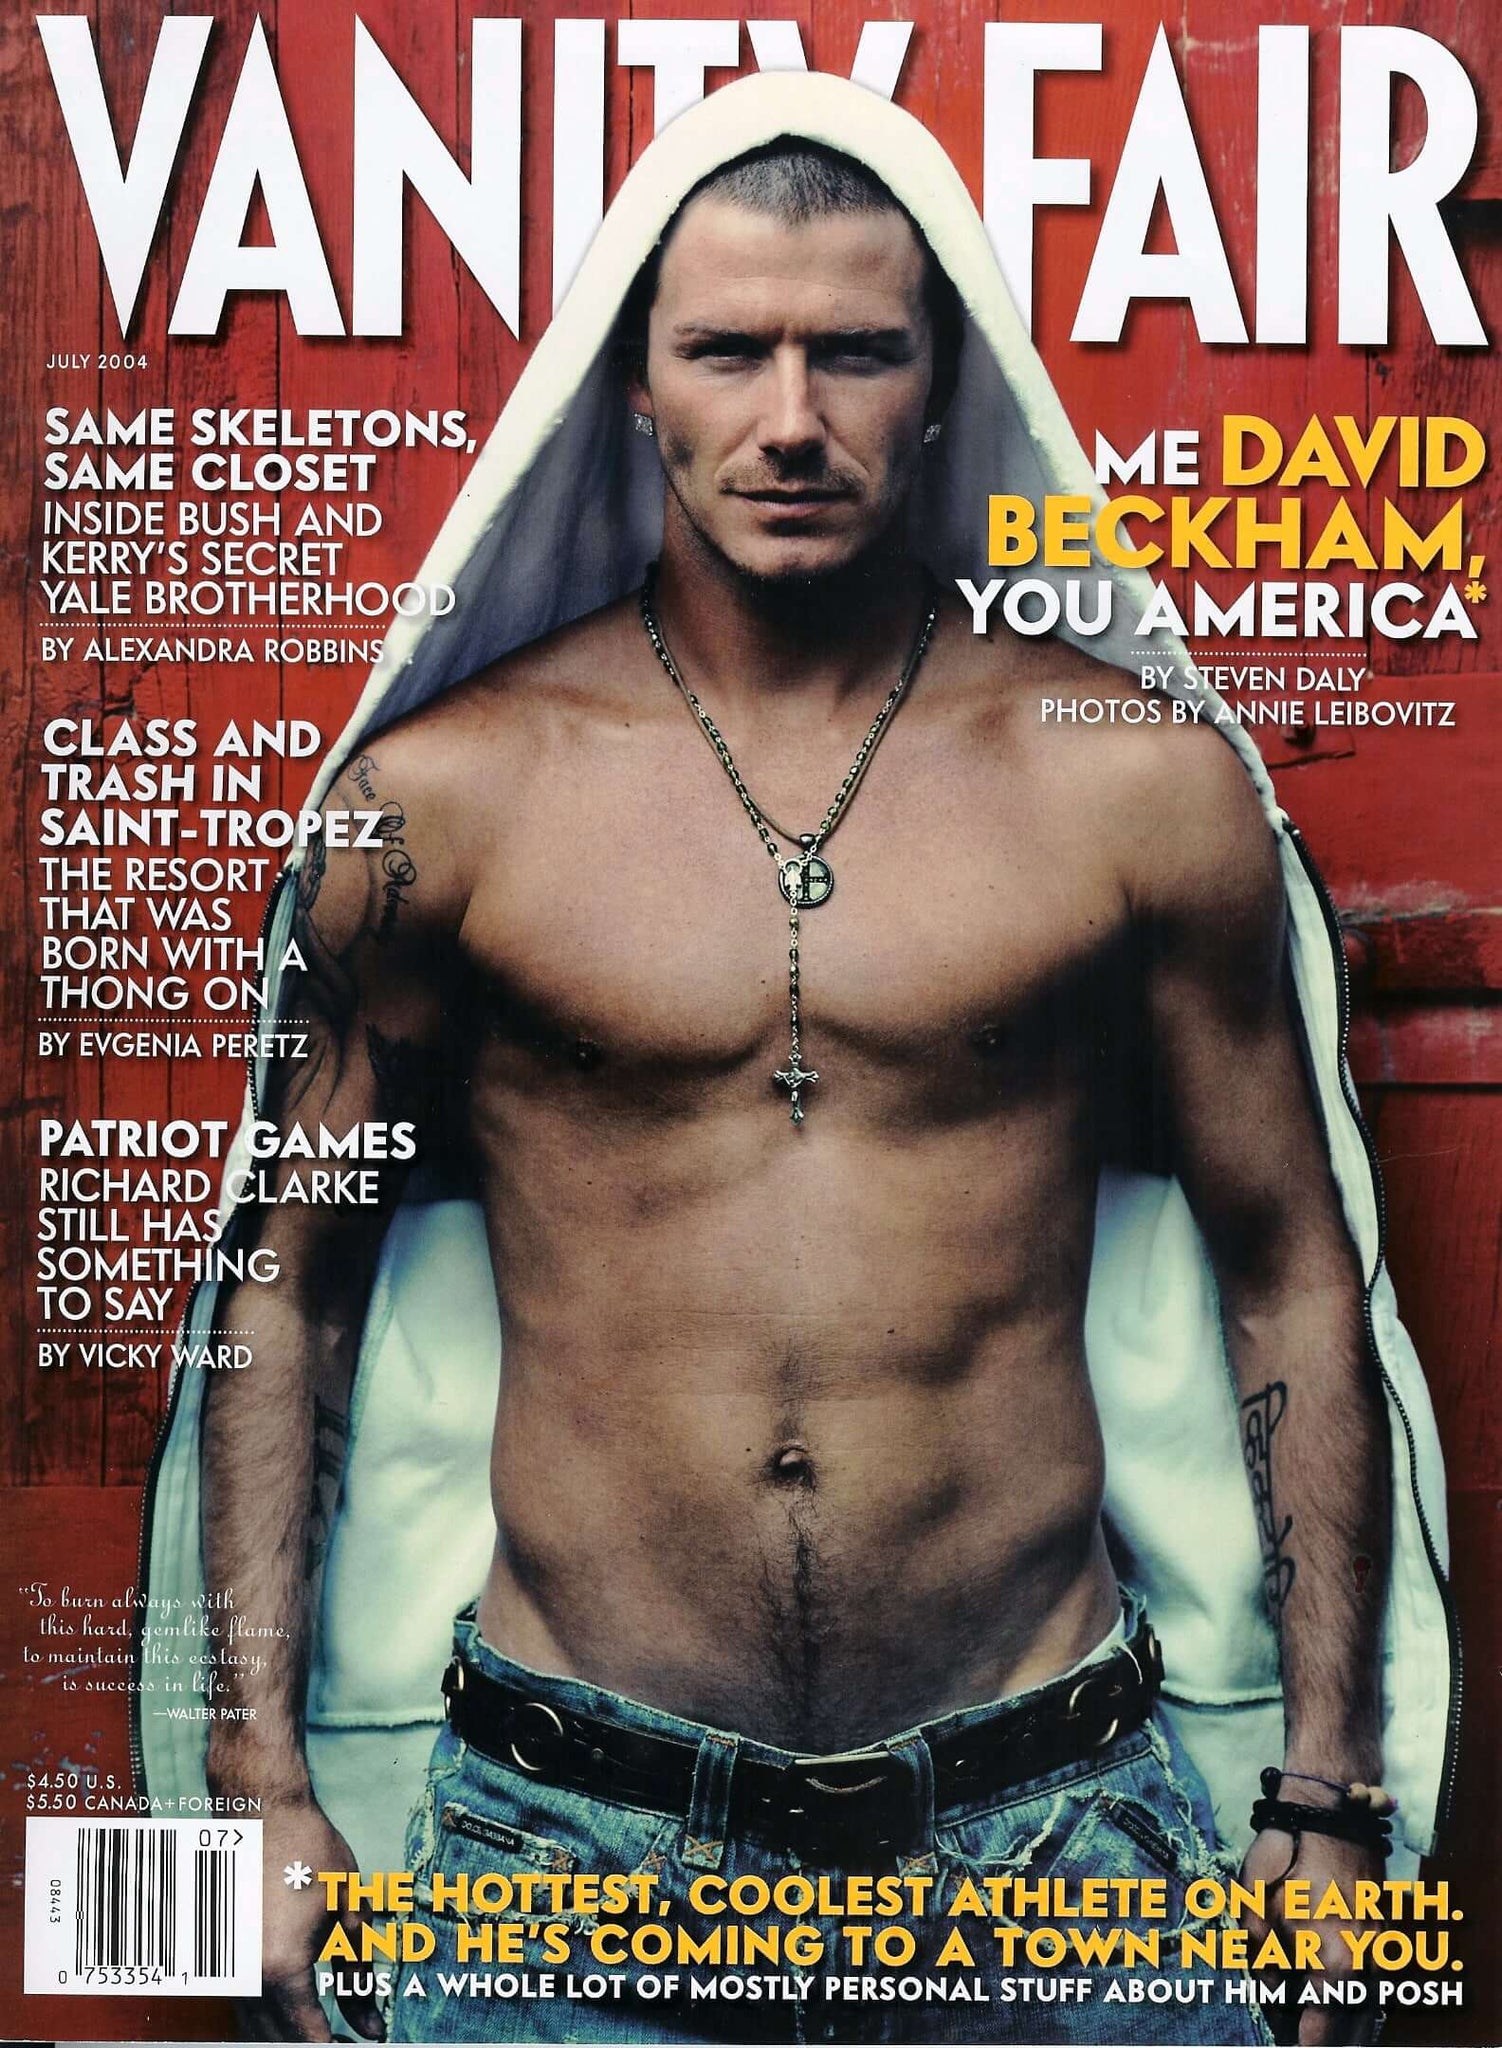 David Beckham for vanity fair with htc loss angeles belt Netflix Victoria Caroline Adam Spice Girls